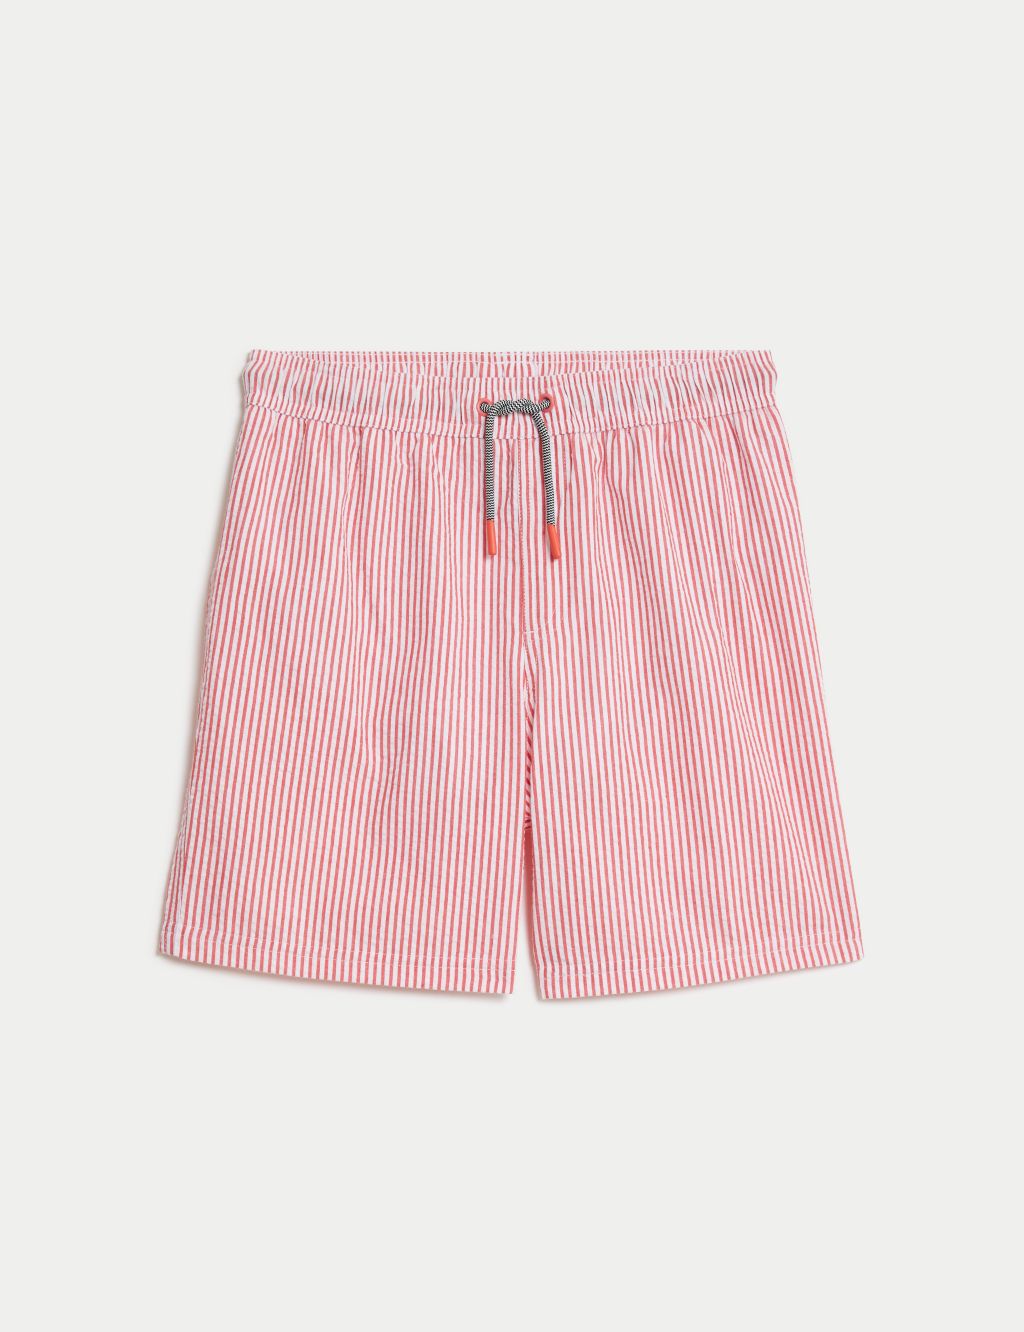 Seersucker Striped Swim Shorts (6-16 Yrs) image 2